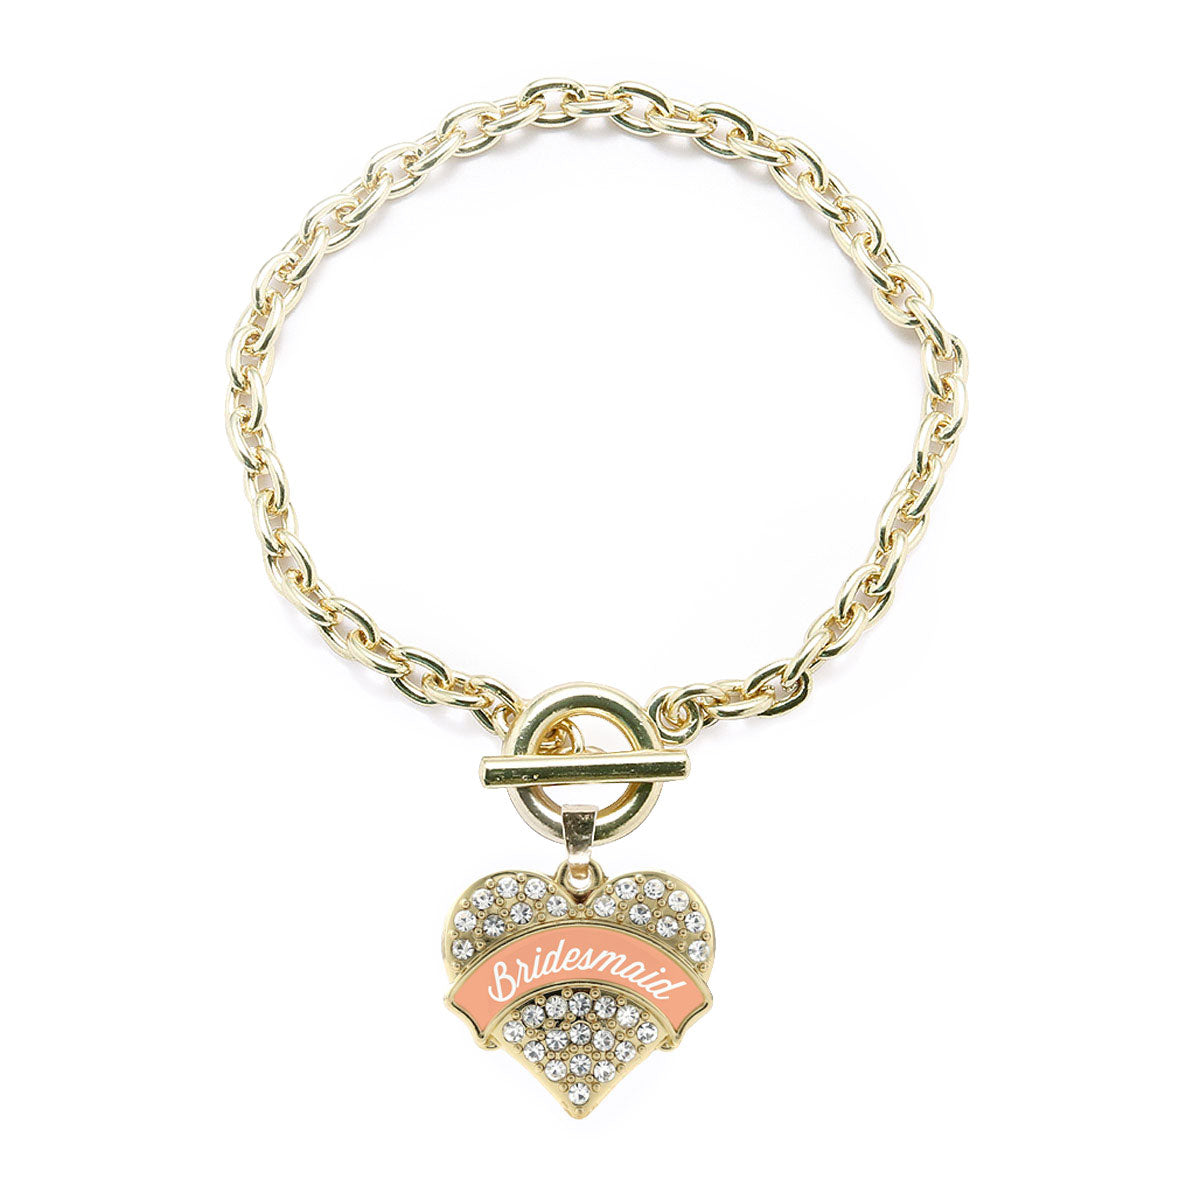 Gold Peach Bridesmaid Pave Heart Charm Toggle Bracelet